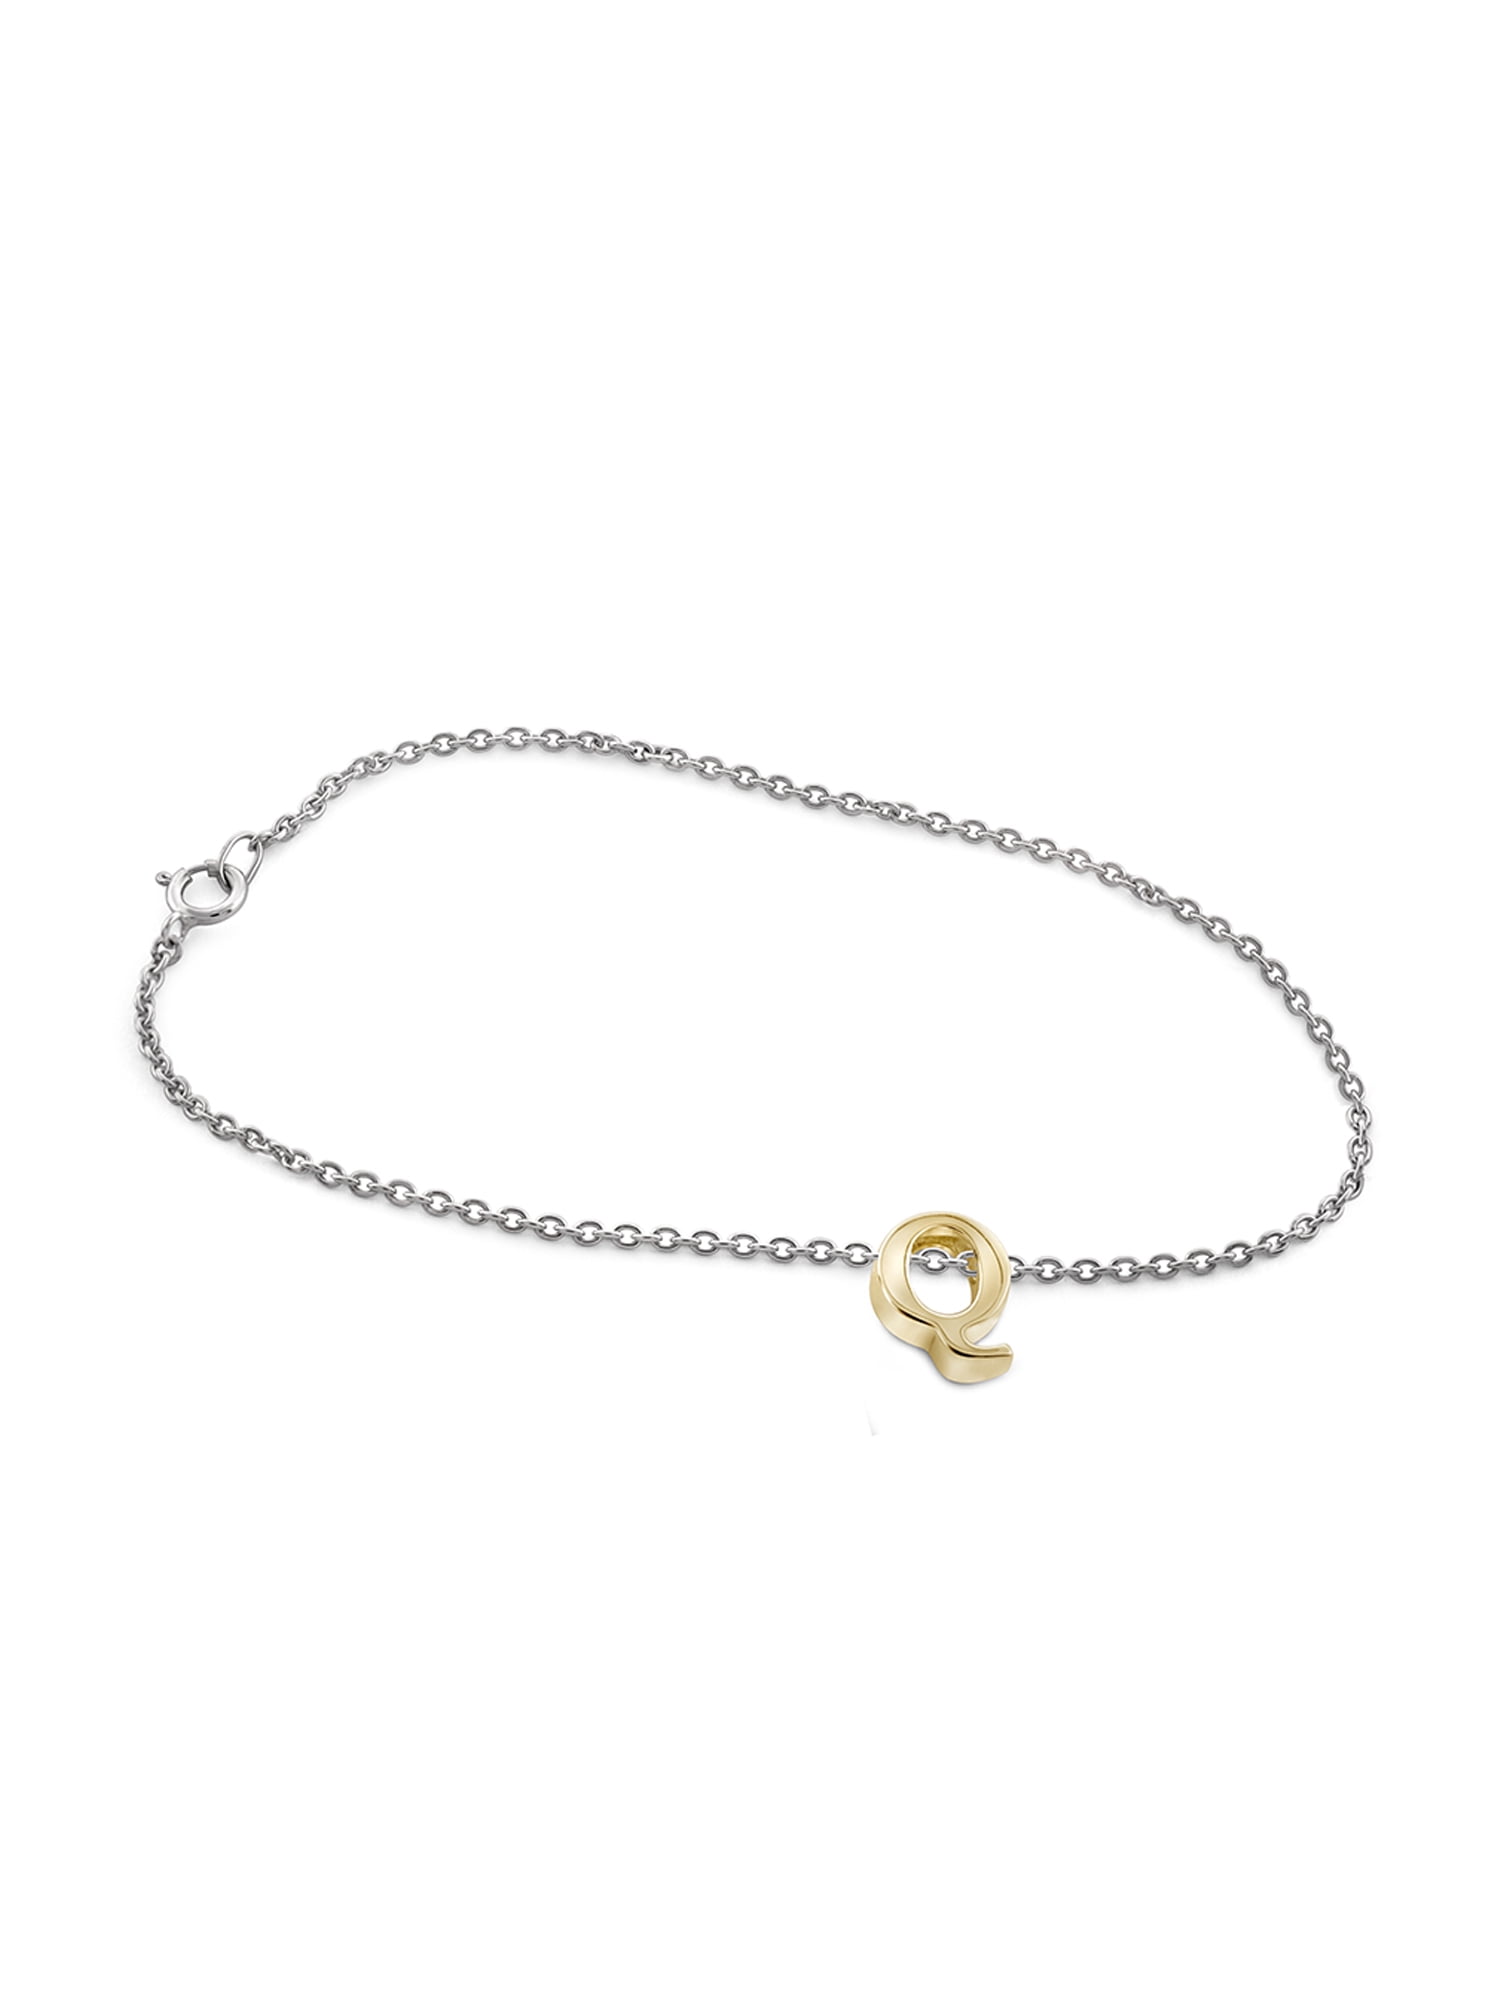 Silvora Elegant Heart Bracelet Women Sterling Silver Initial Letter N  Bracelets Charms for Girlfriend